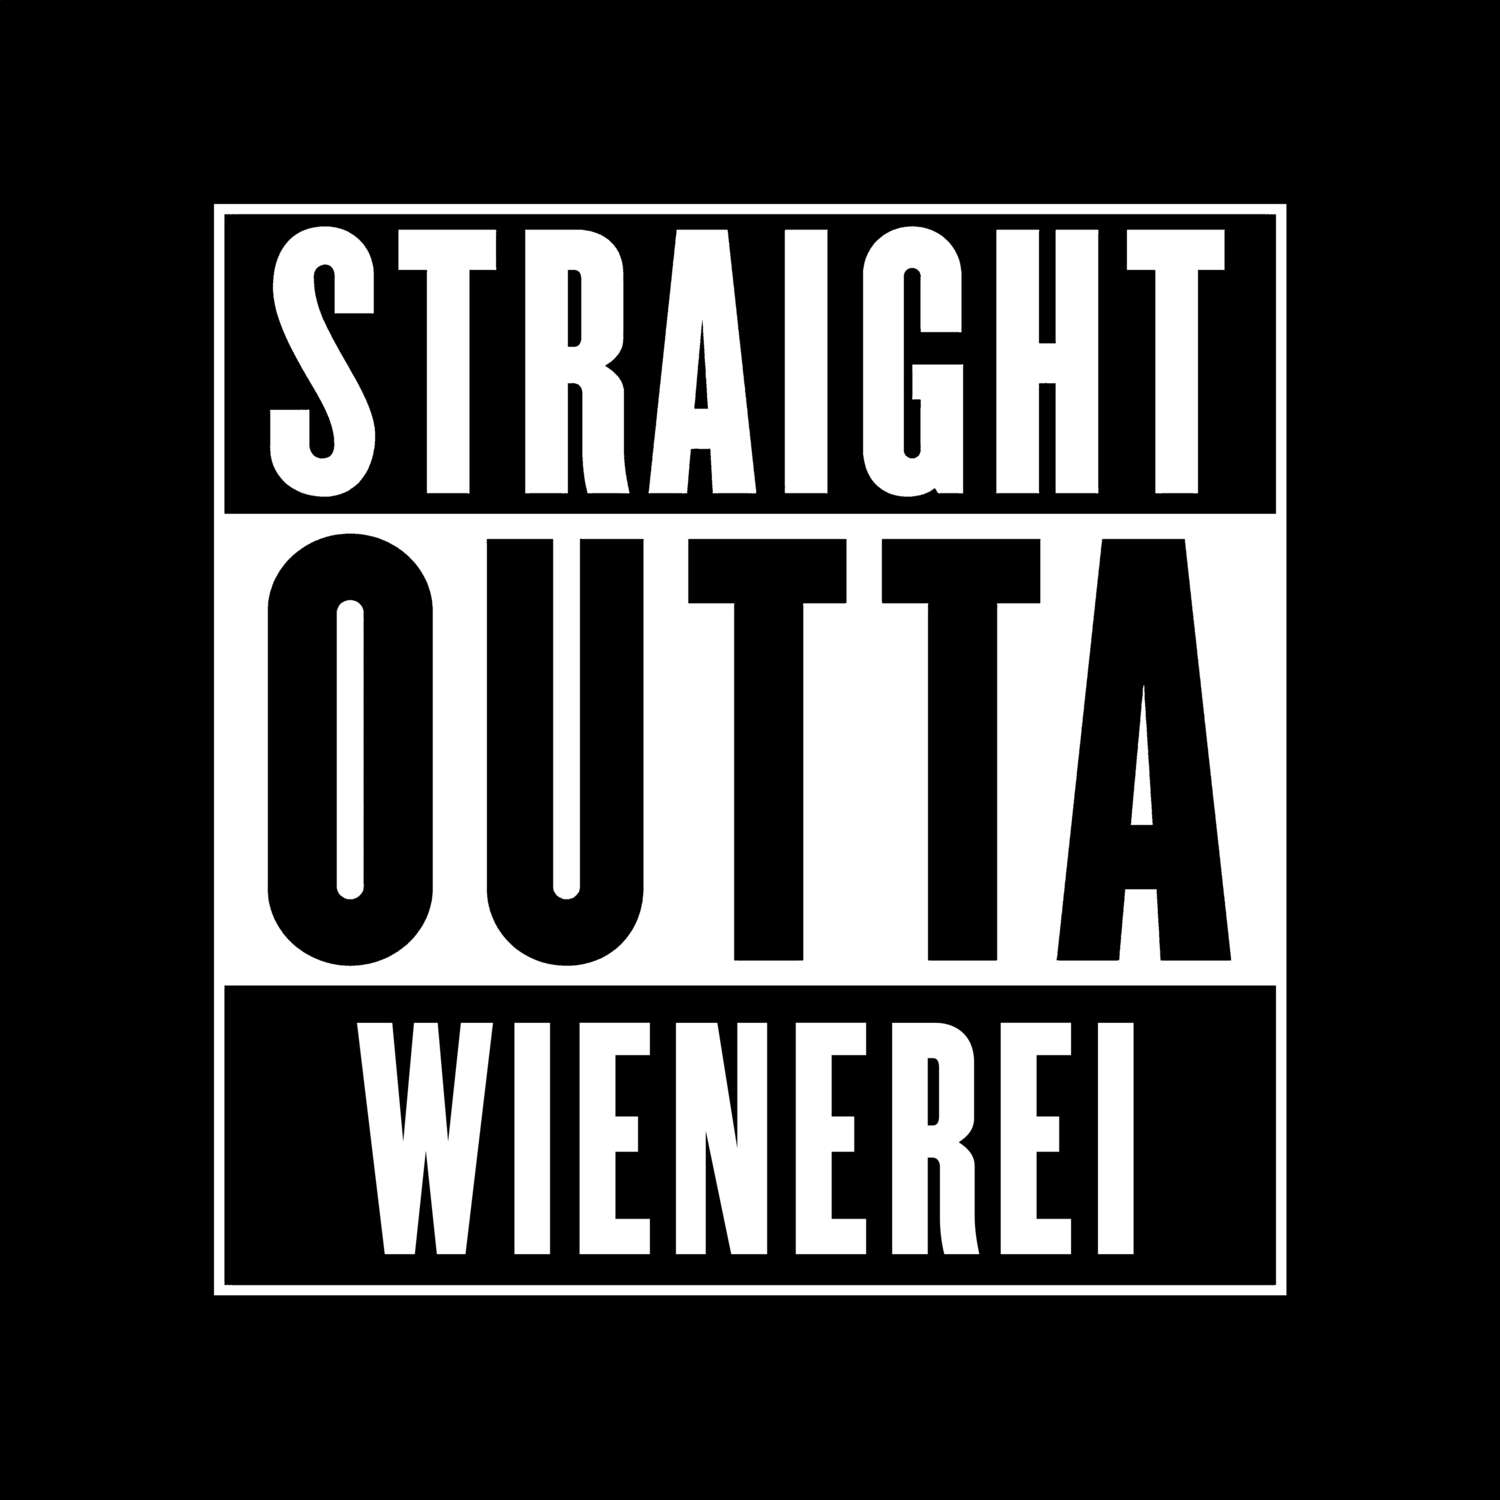 Wienerei T-Shirt »Straight Outta«